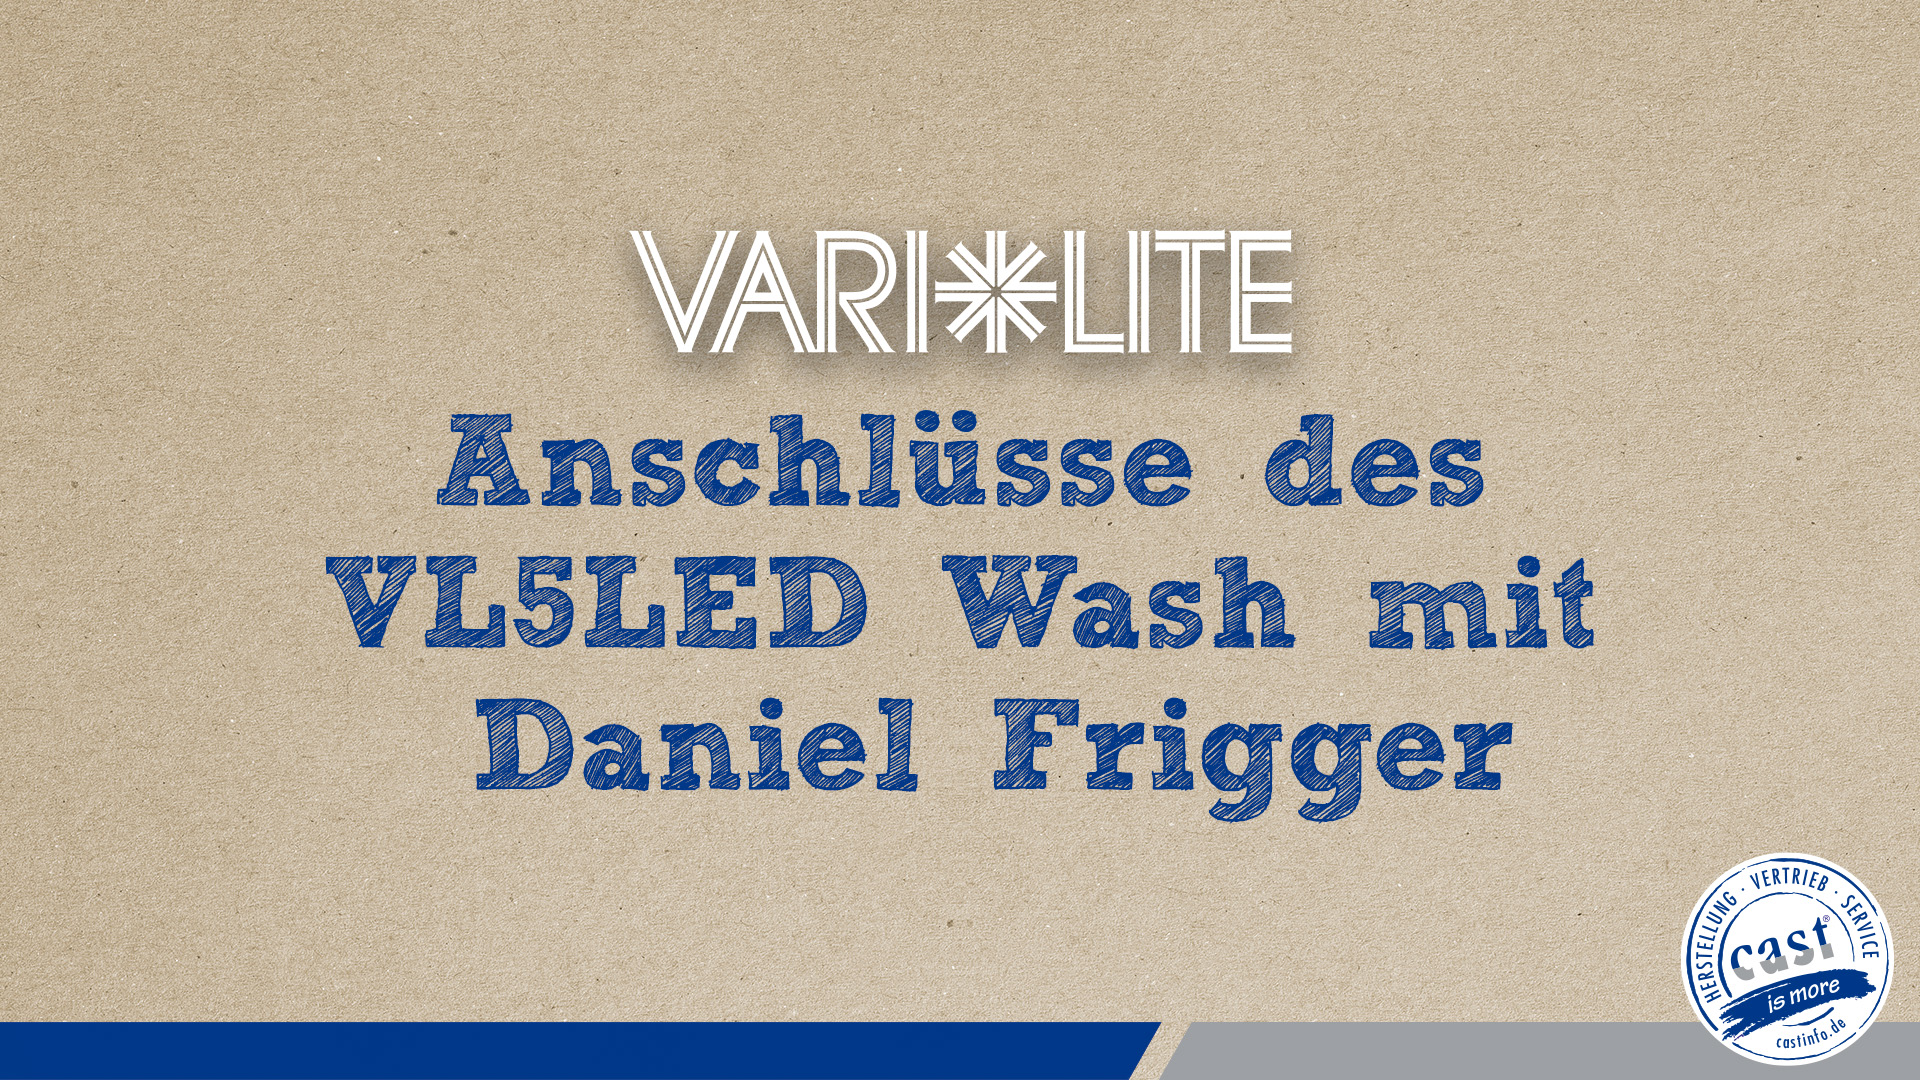 castVlog mit Daniel Frigger über die Anschlüsse beim VL5LED wash